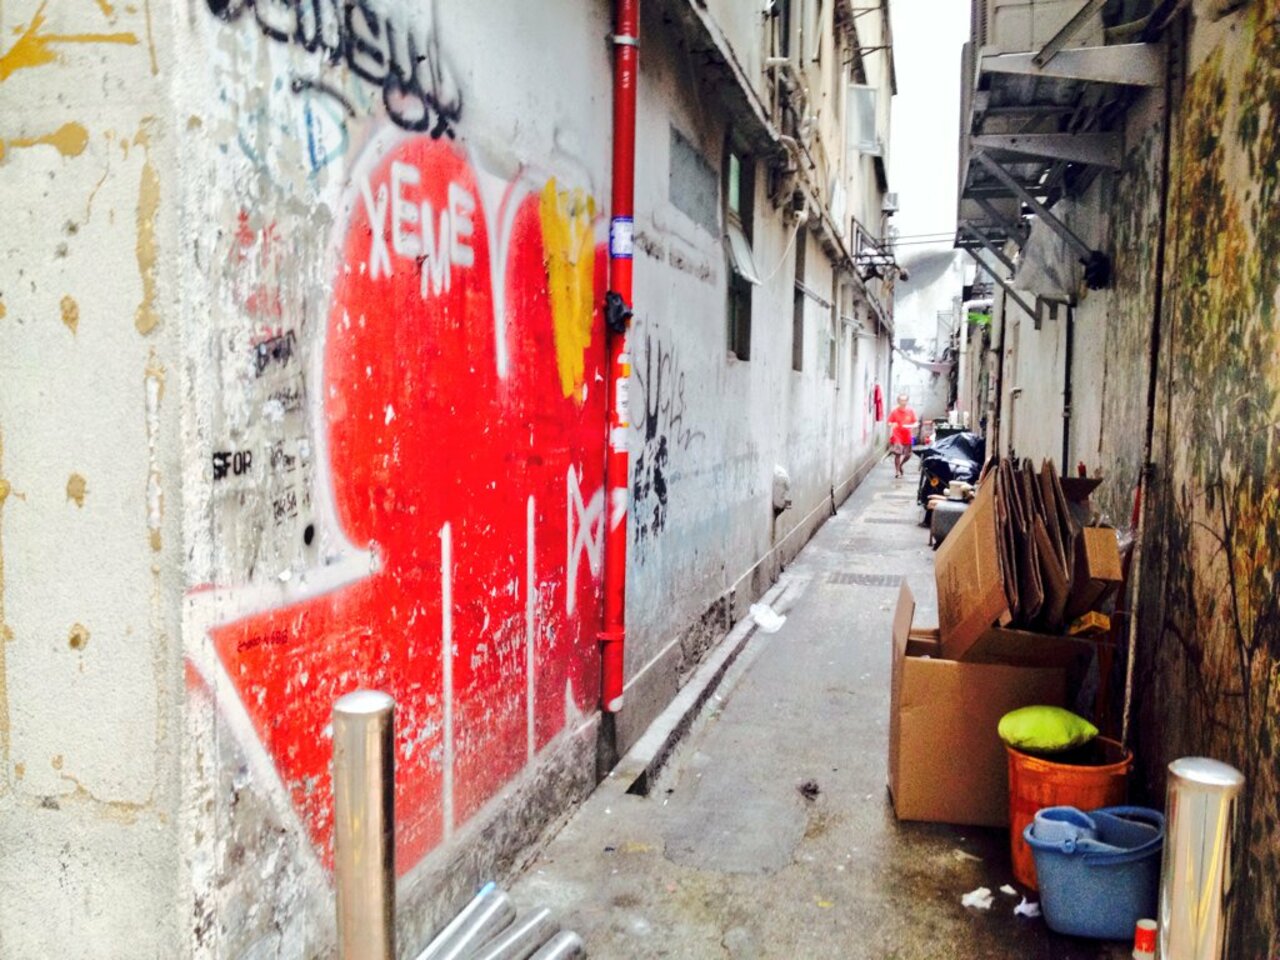 Causeway Bay alleyway
#streetart #urbanart #graffiti #stencil #tag #DonneGraffiti #HongKong #streetphotography https://t.co/zHwjIJQG74